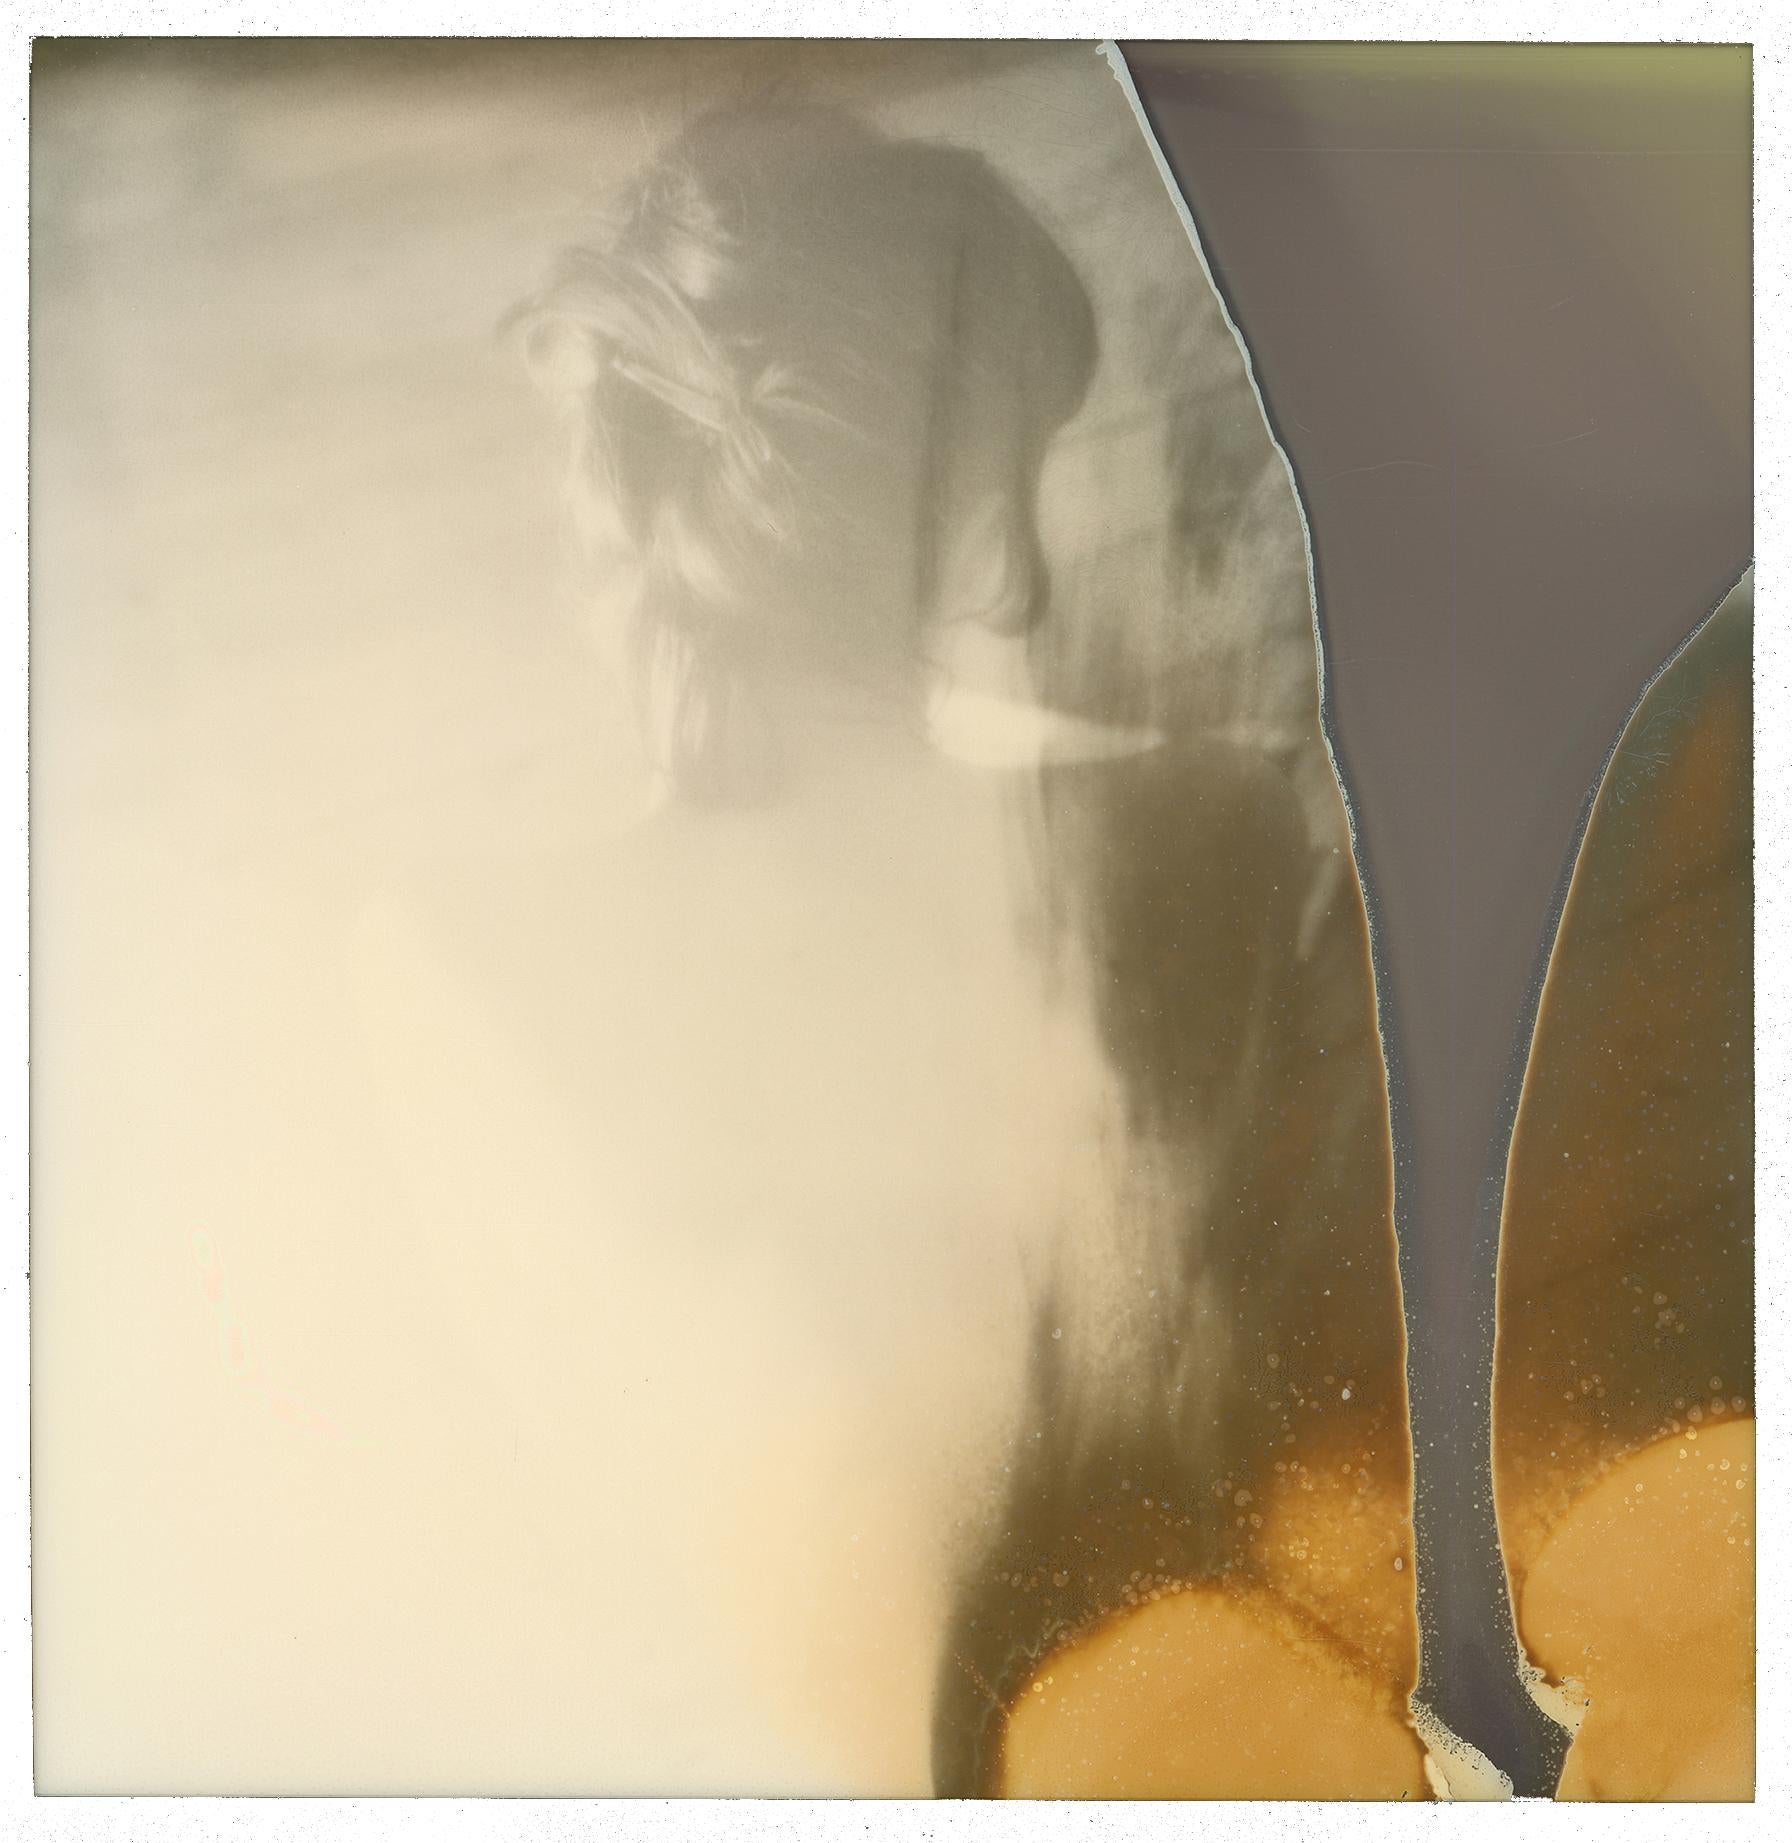 Disappear - Contemporary, Conceptual, Polaroid, 21st Century, Portrait, Color - Photograph by Urizen Freaza